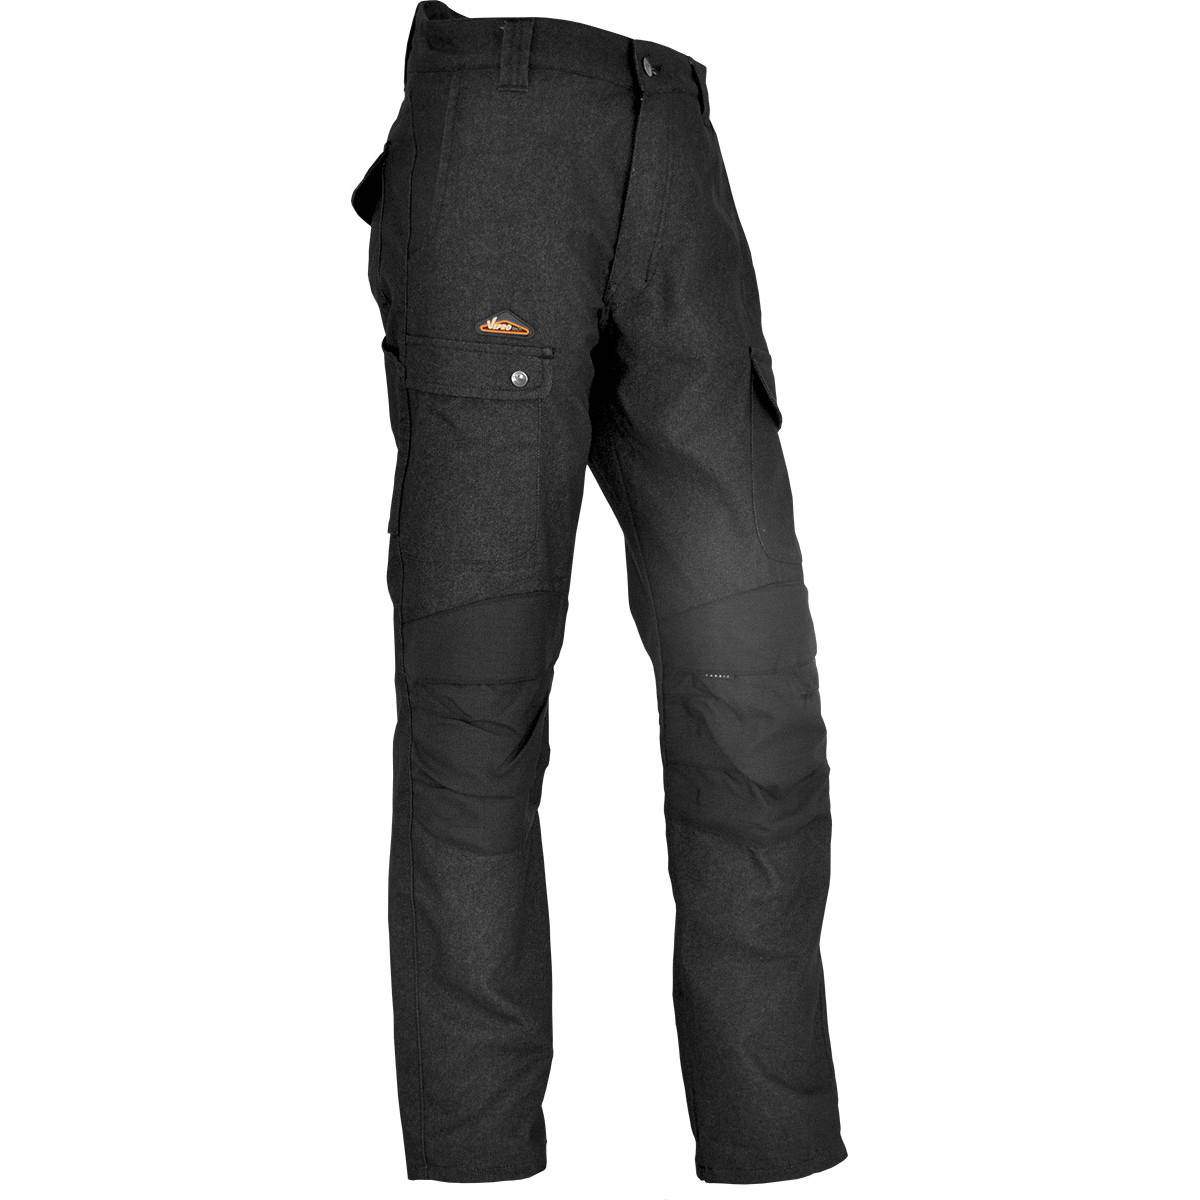 ENDU Work Pants size 42, black